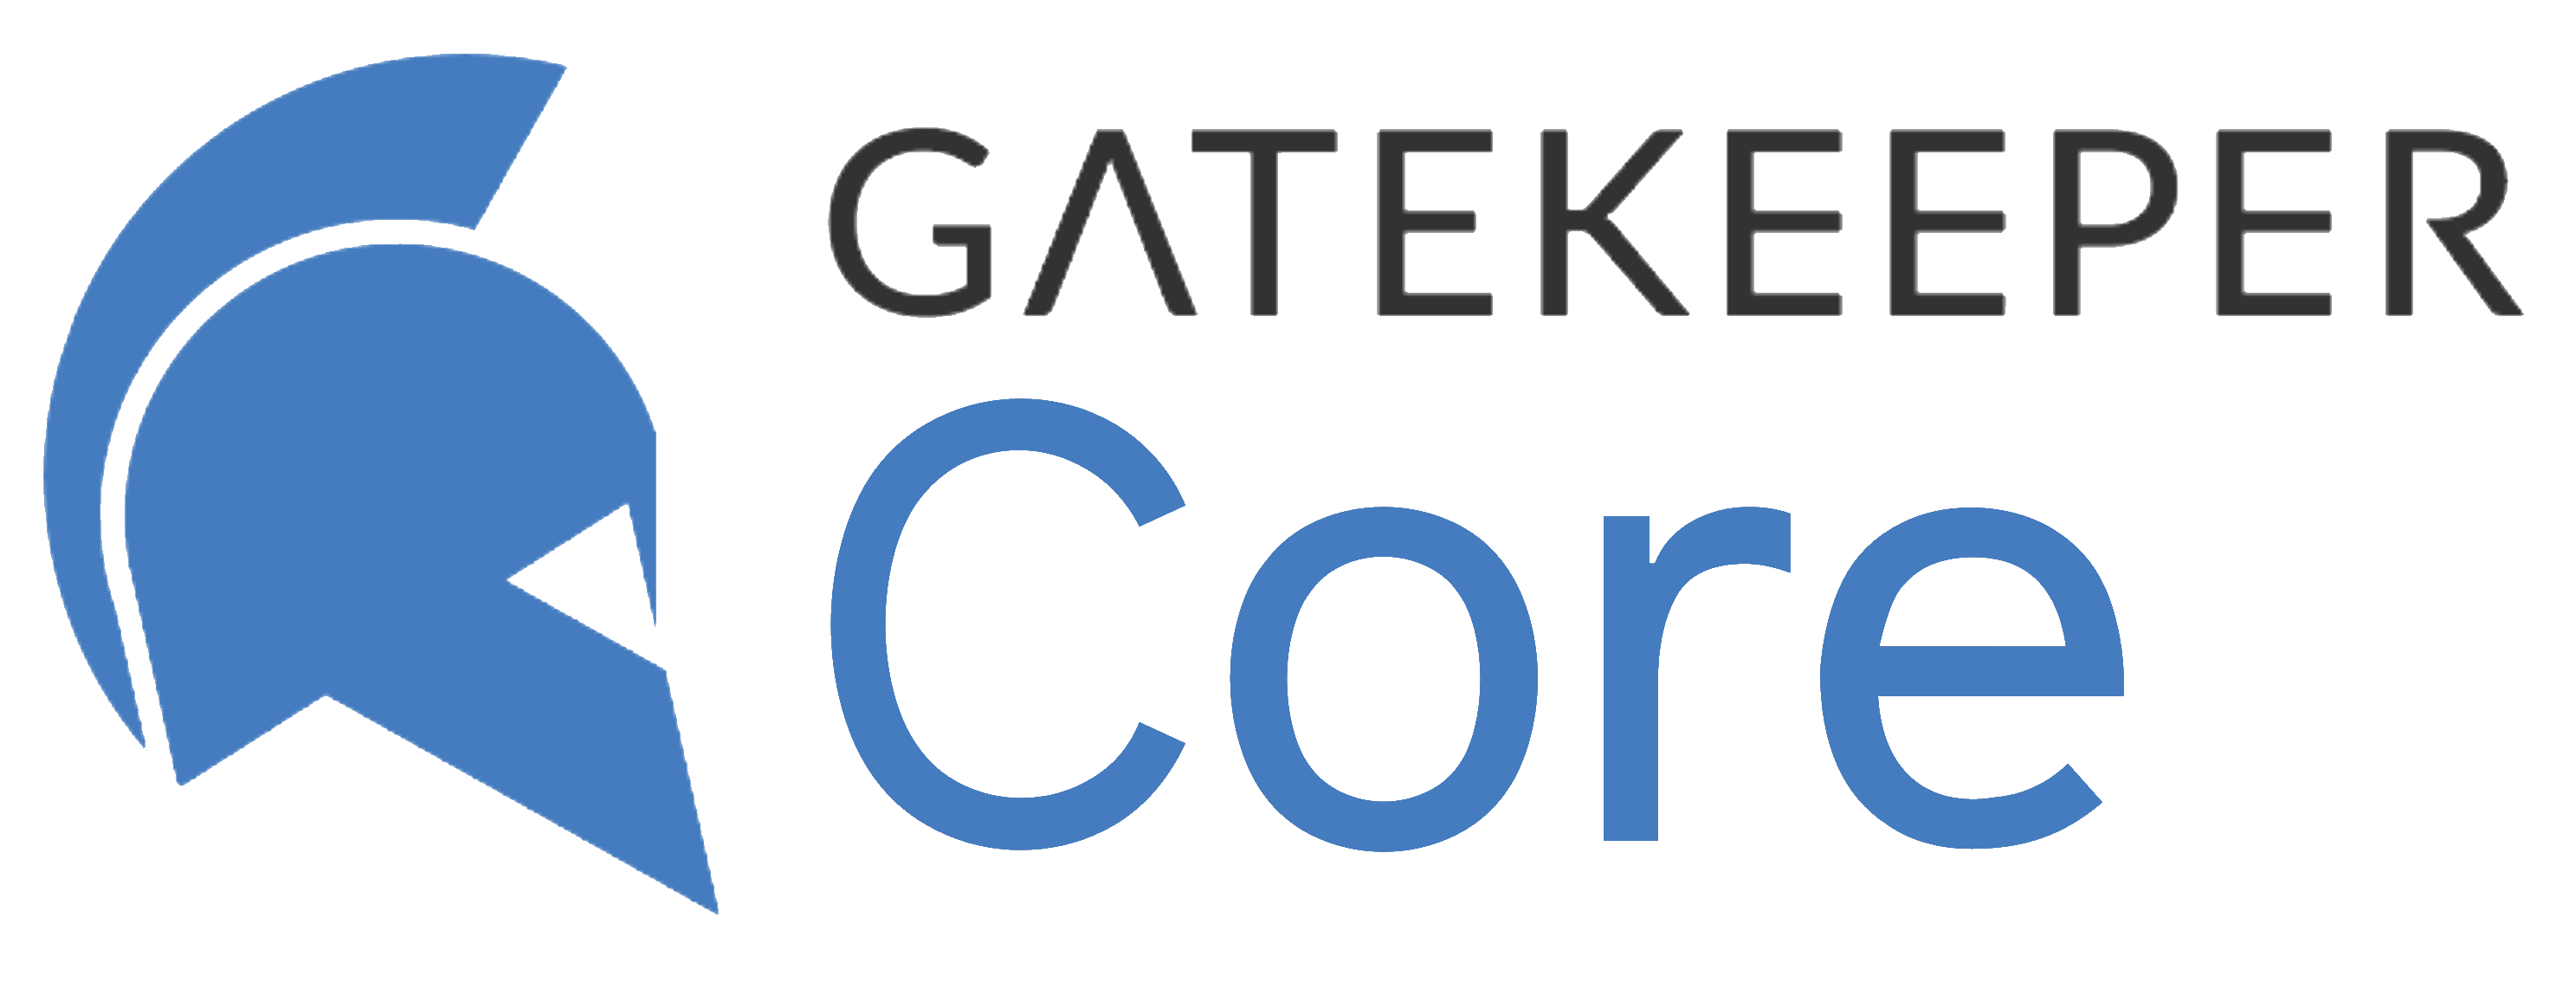 Core1_GateKeeper_Enterprise_Proximity_login_solution_passwordless_access_control.png